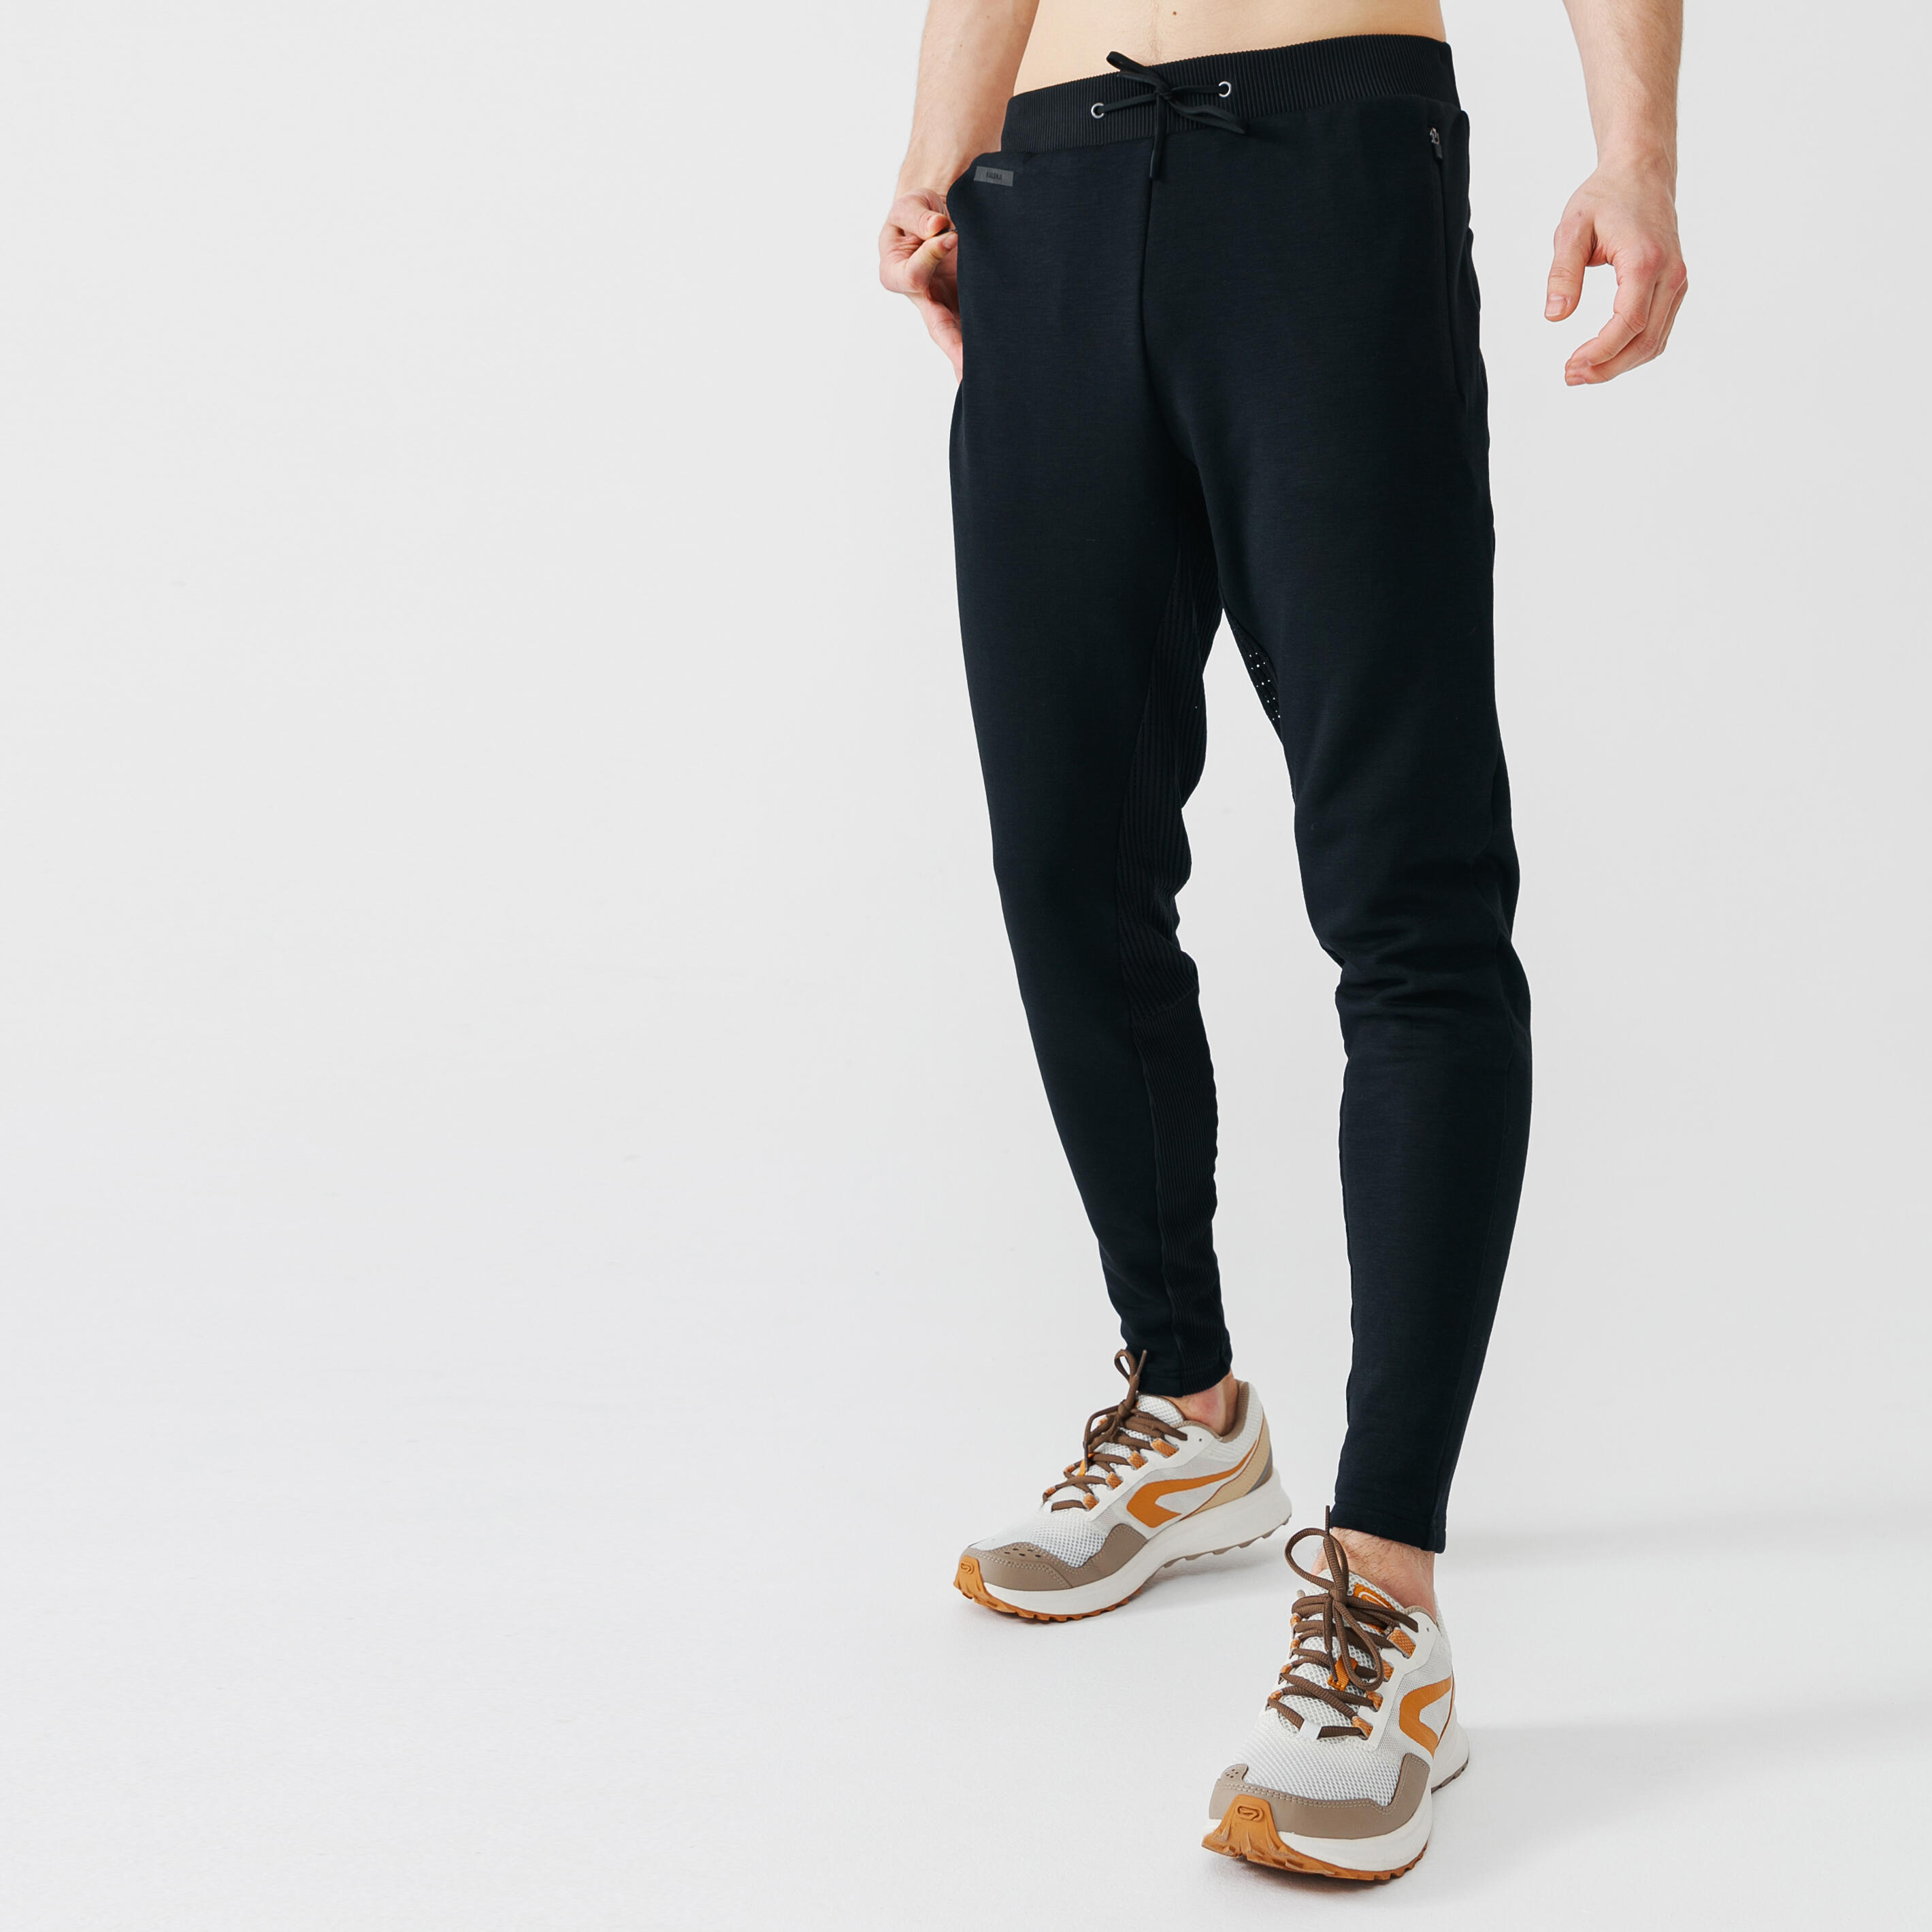 Buy Running Track Pants Black Online  Decathlon